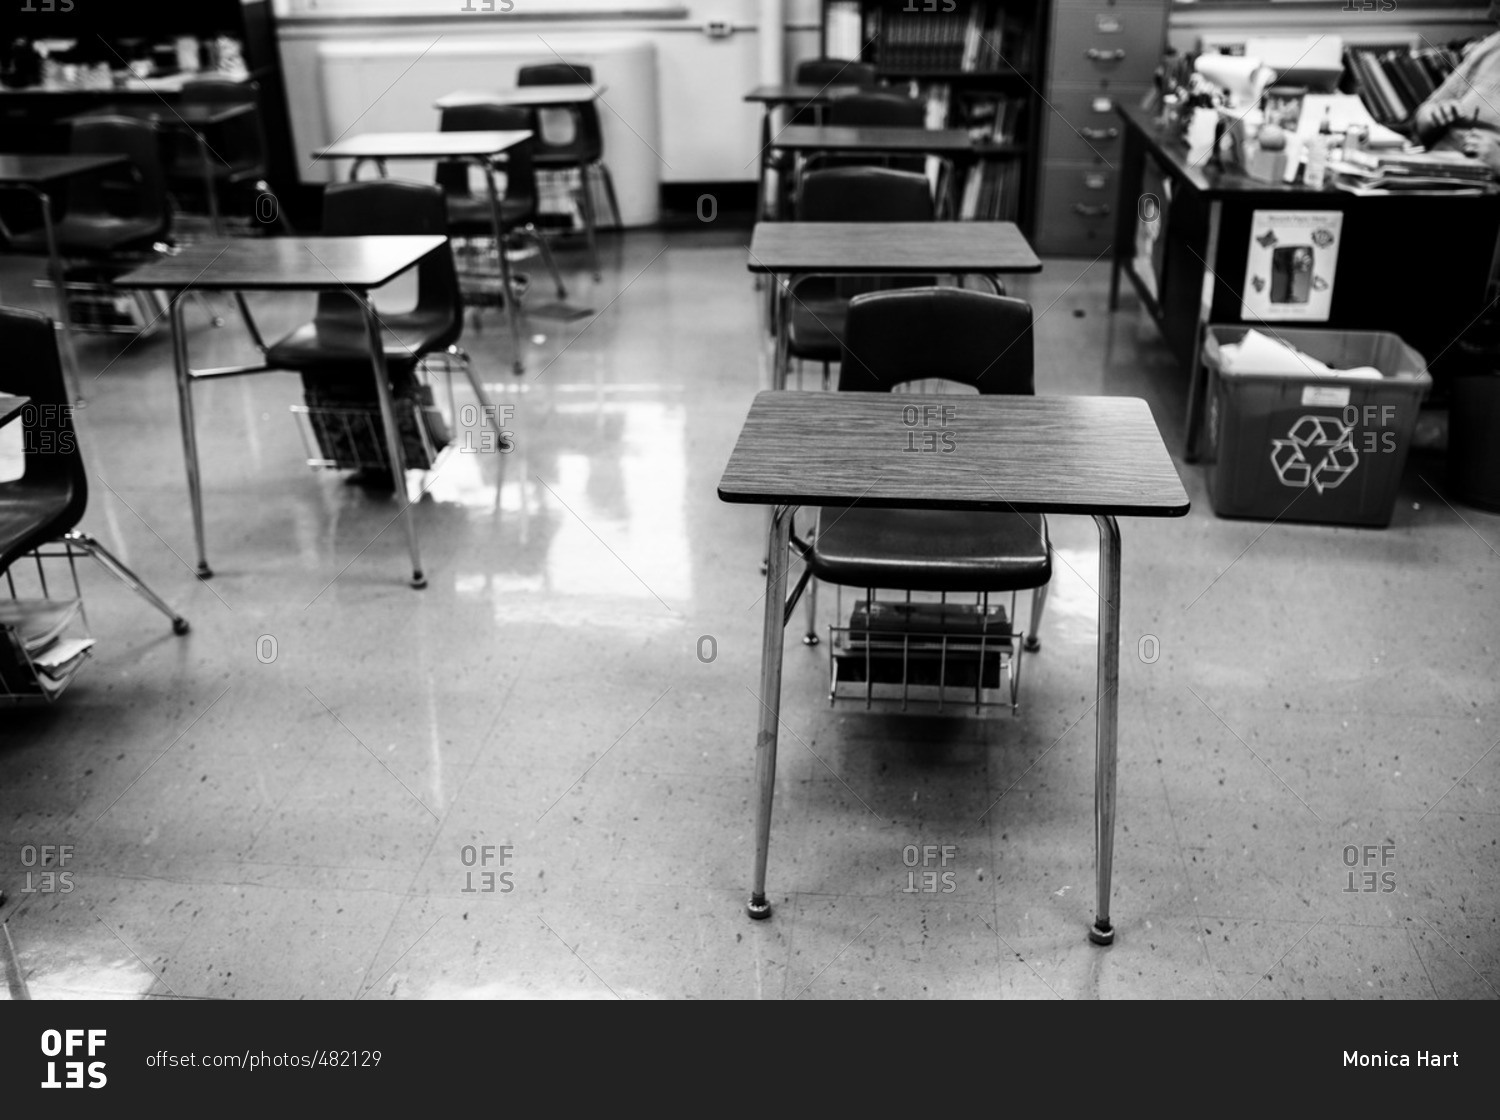 desks-in-a-classroom-offset-stock-photo-offset